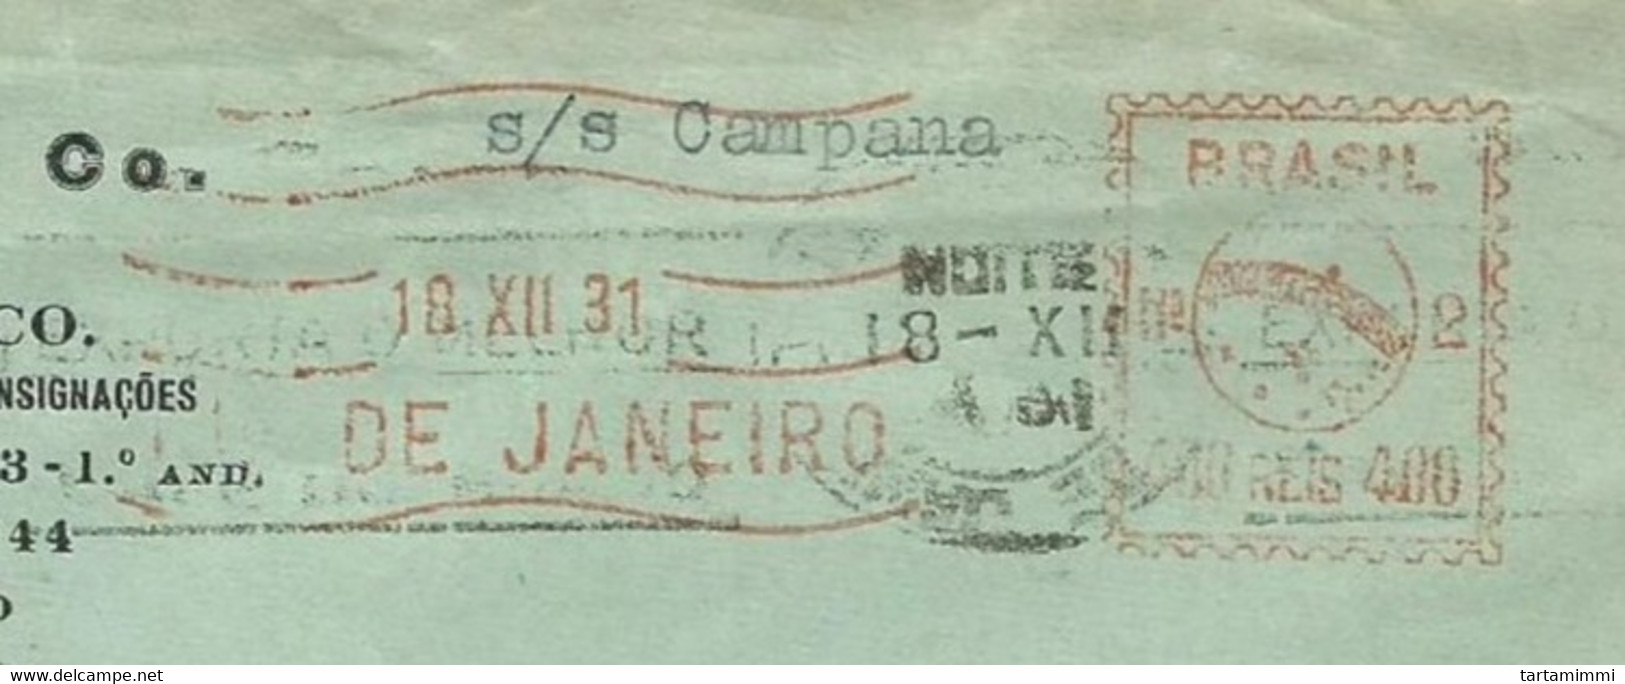 EMA METER STAMP FREISTEMPEL TYPE B1A BRASIL BRAZIL RIO DE JANEIRO 1931 BONESCHI S/S CAMPANA TO FRANCE - Franking Labels